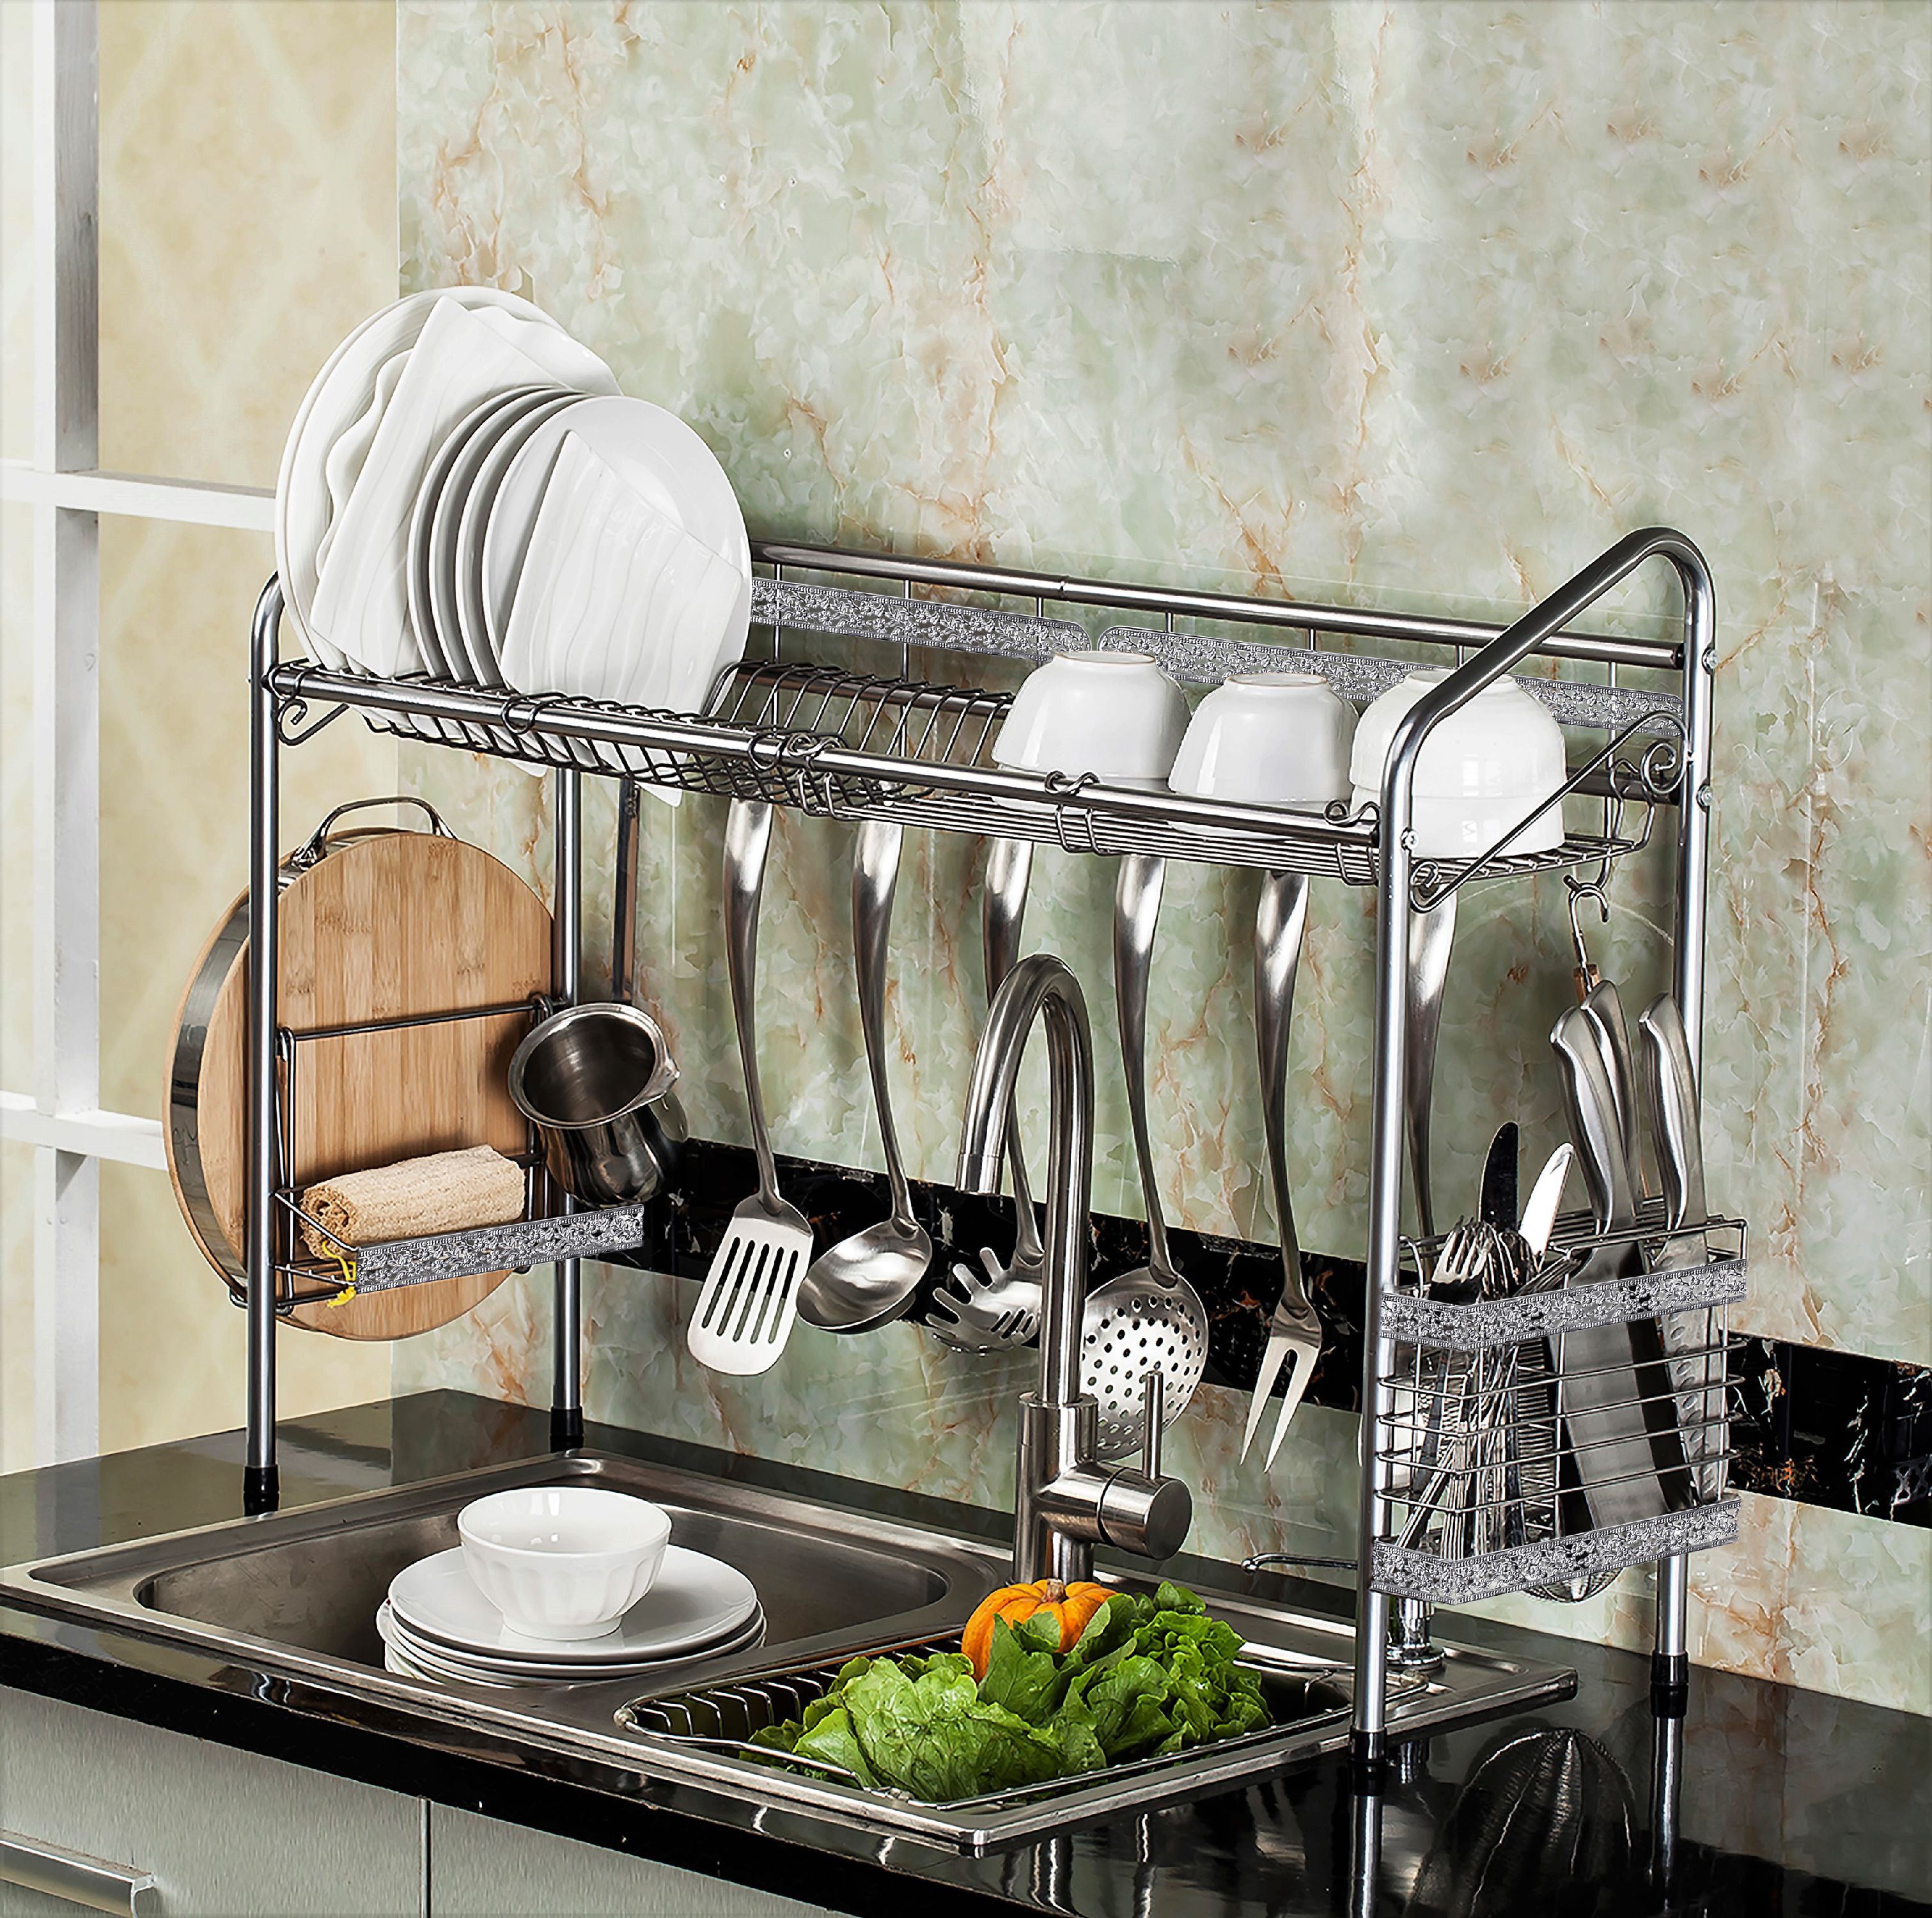 PremiumRacks Professional Over The Sink Dish Rack Fully Customizable Multipurpose Large